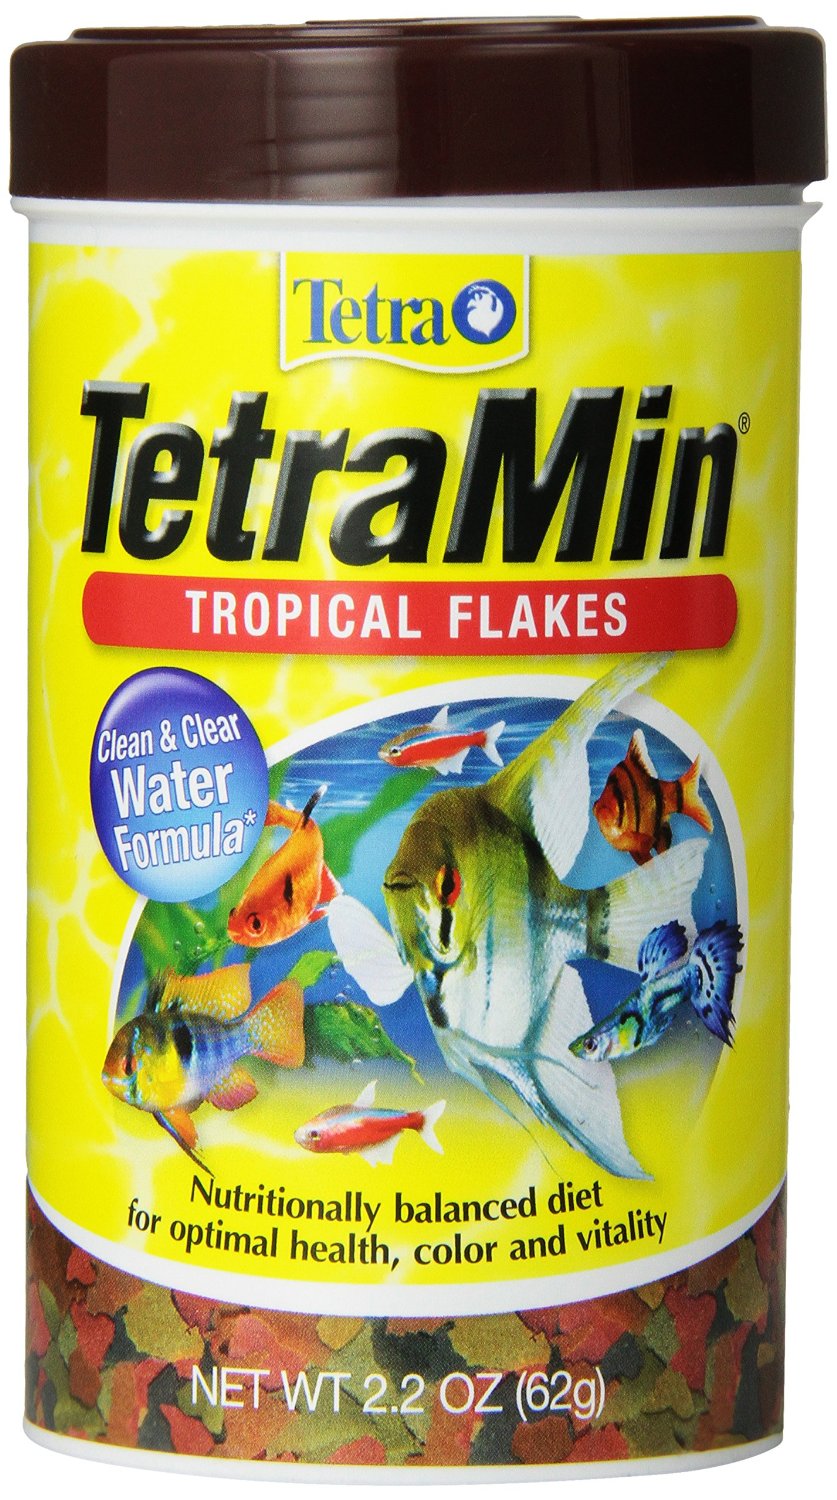 TetraMin Tropical Flakes, 2.2 oz